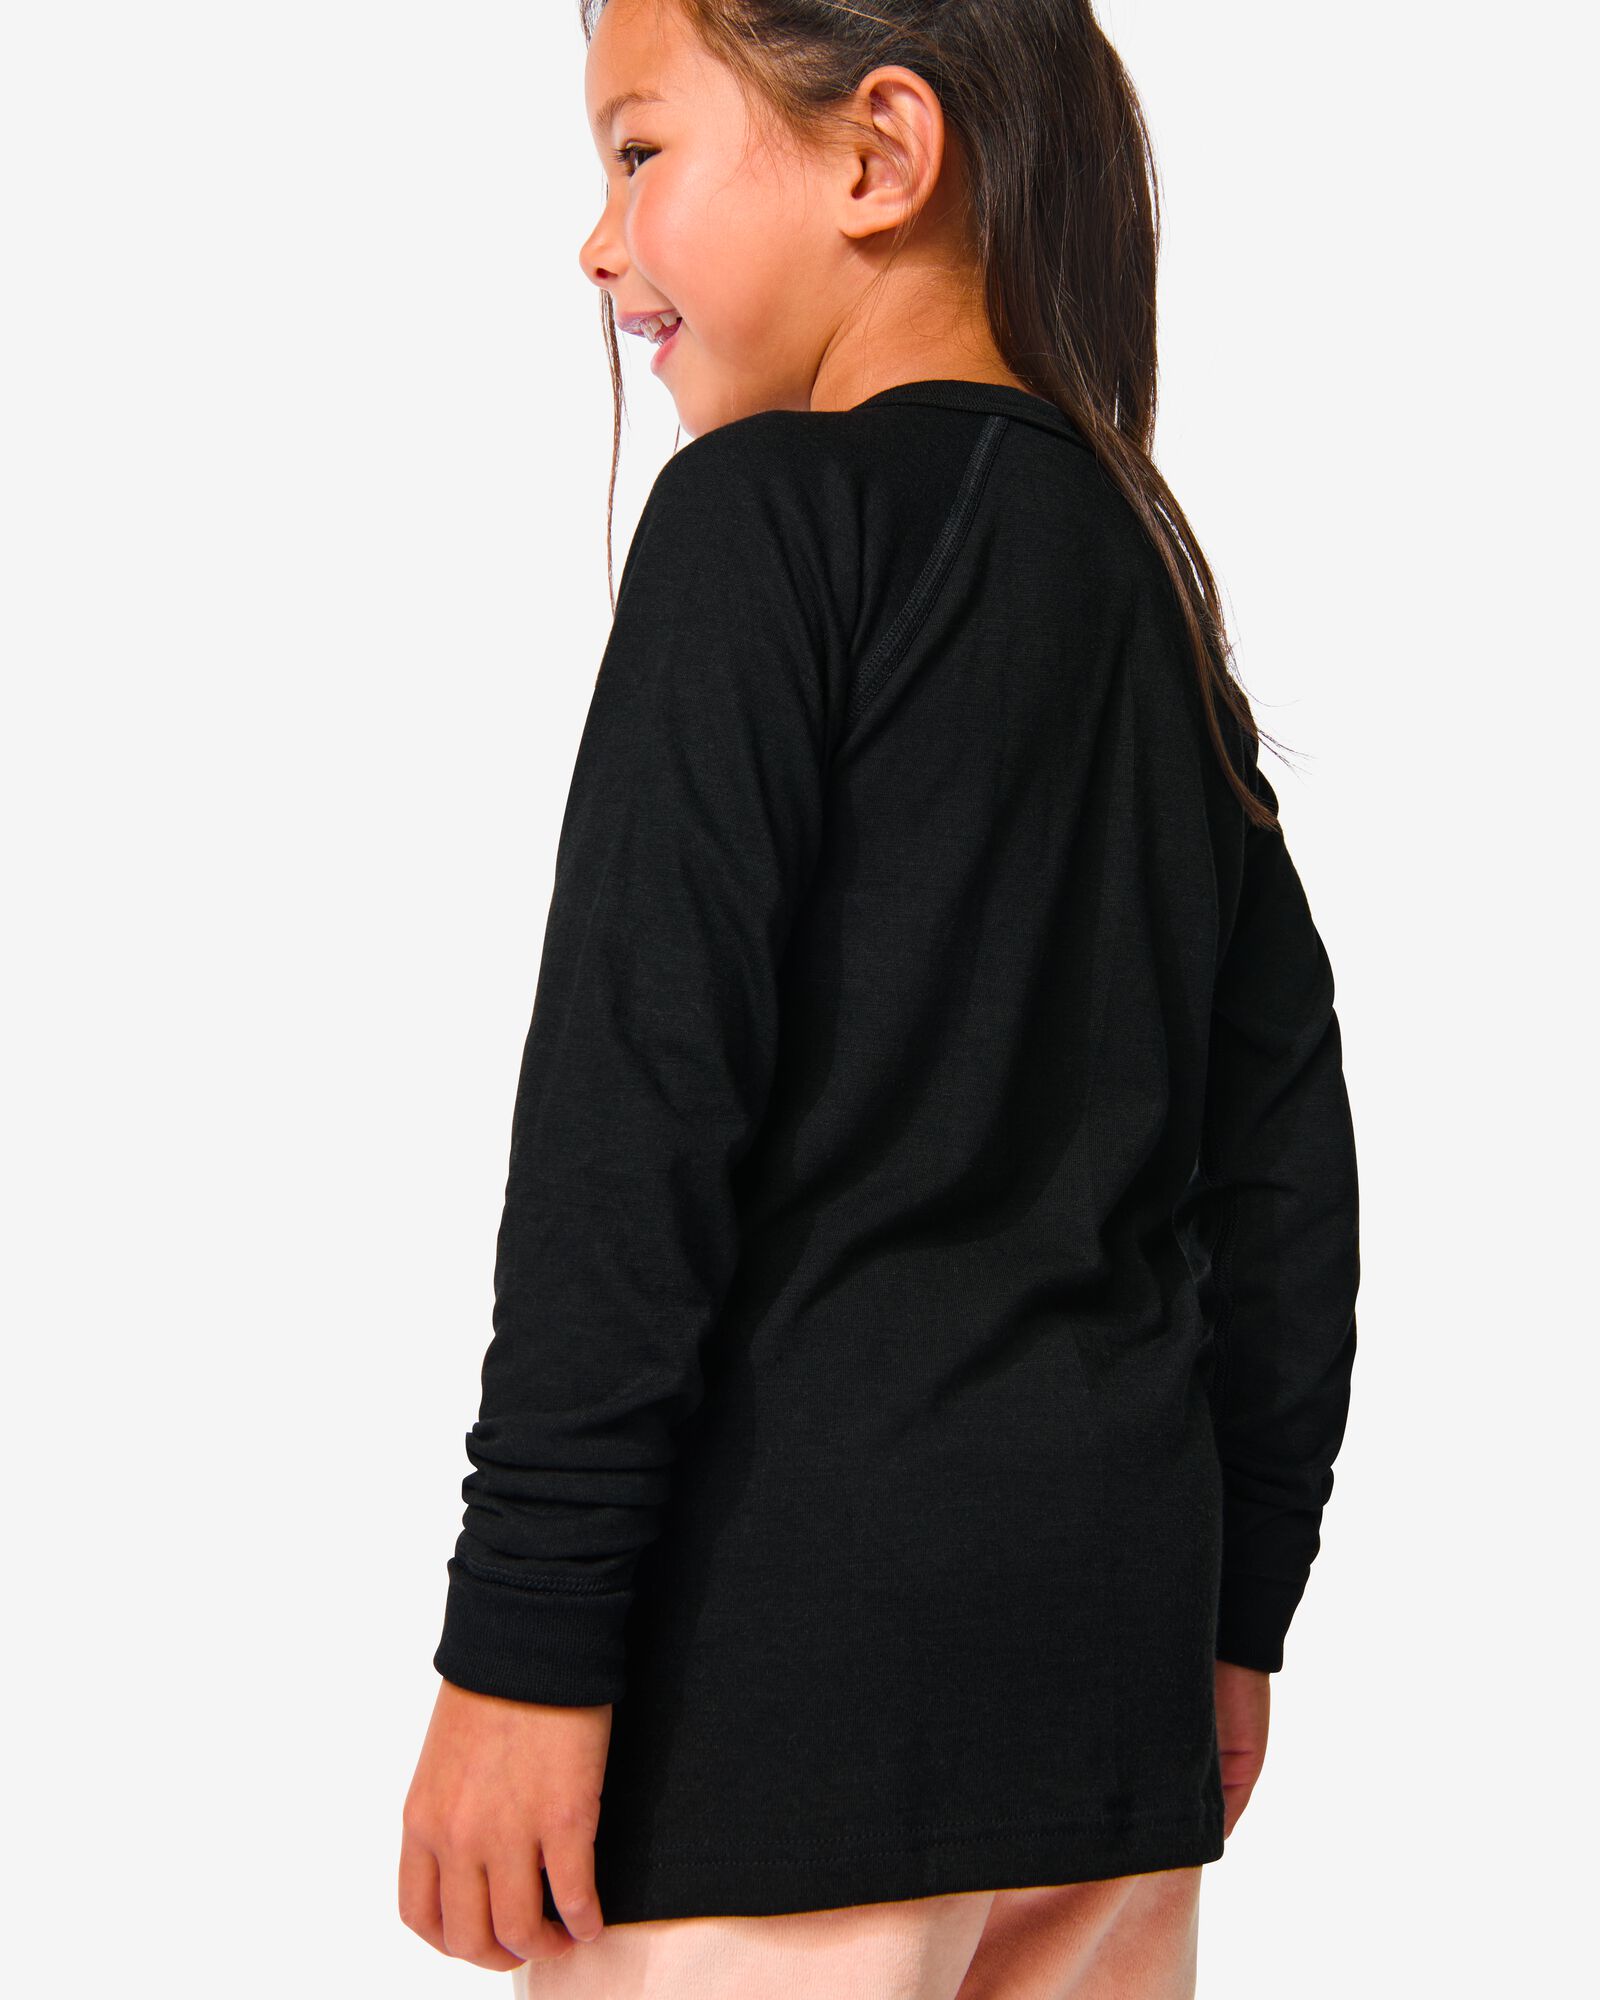 t-shirt thermo enfant noir noir - 1000001475 - HEMA